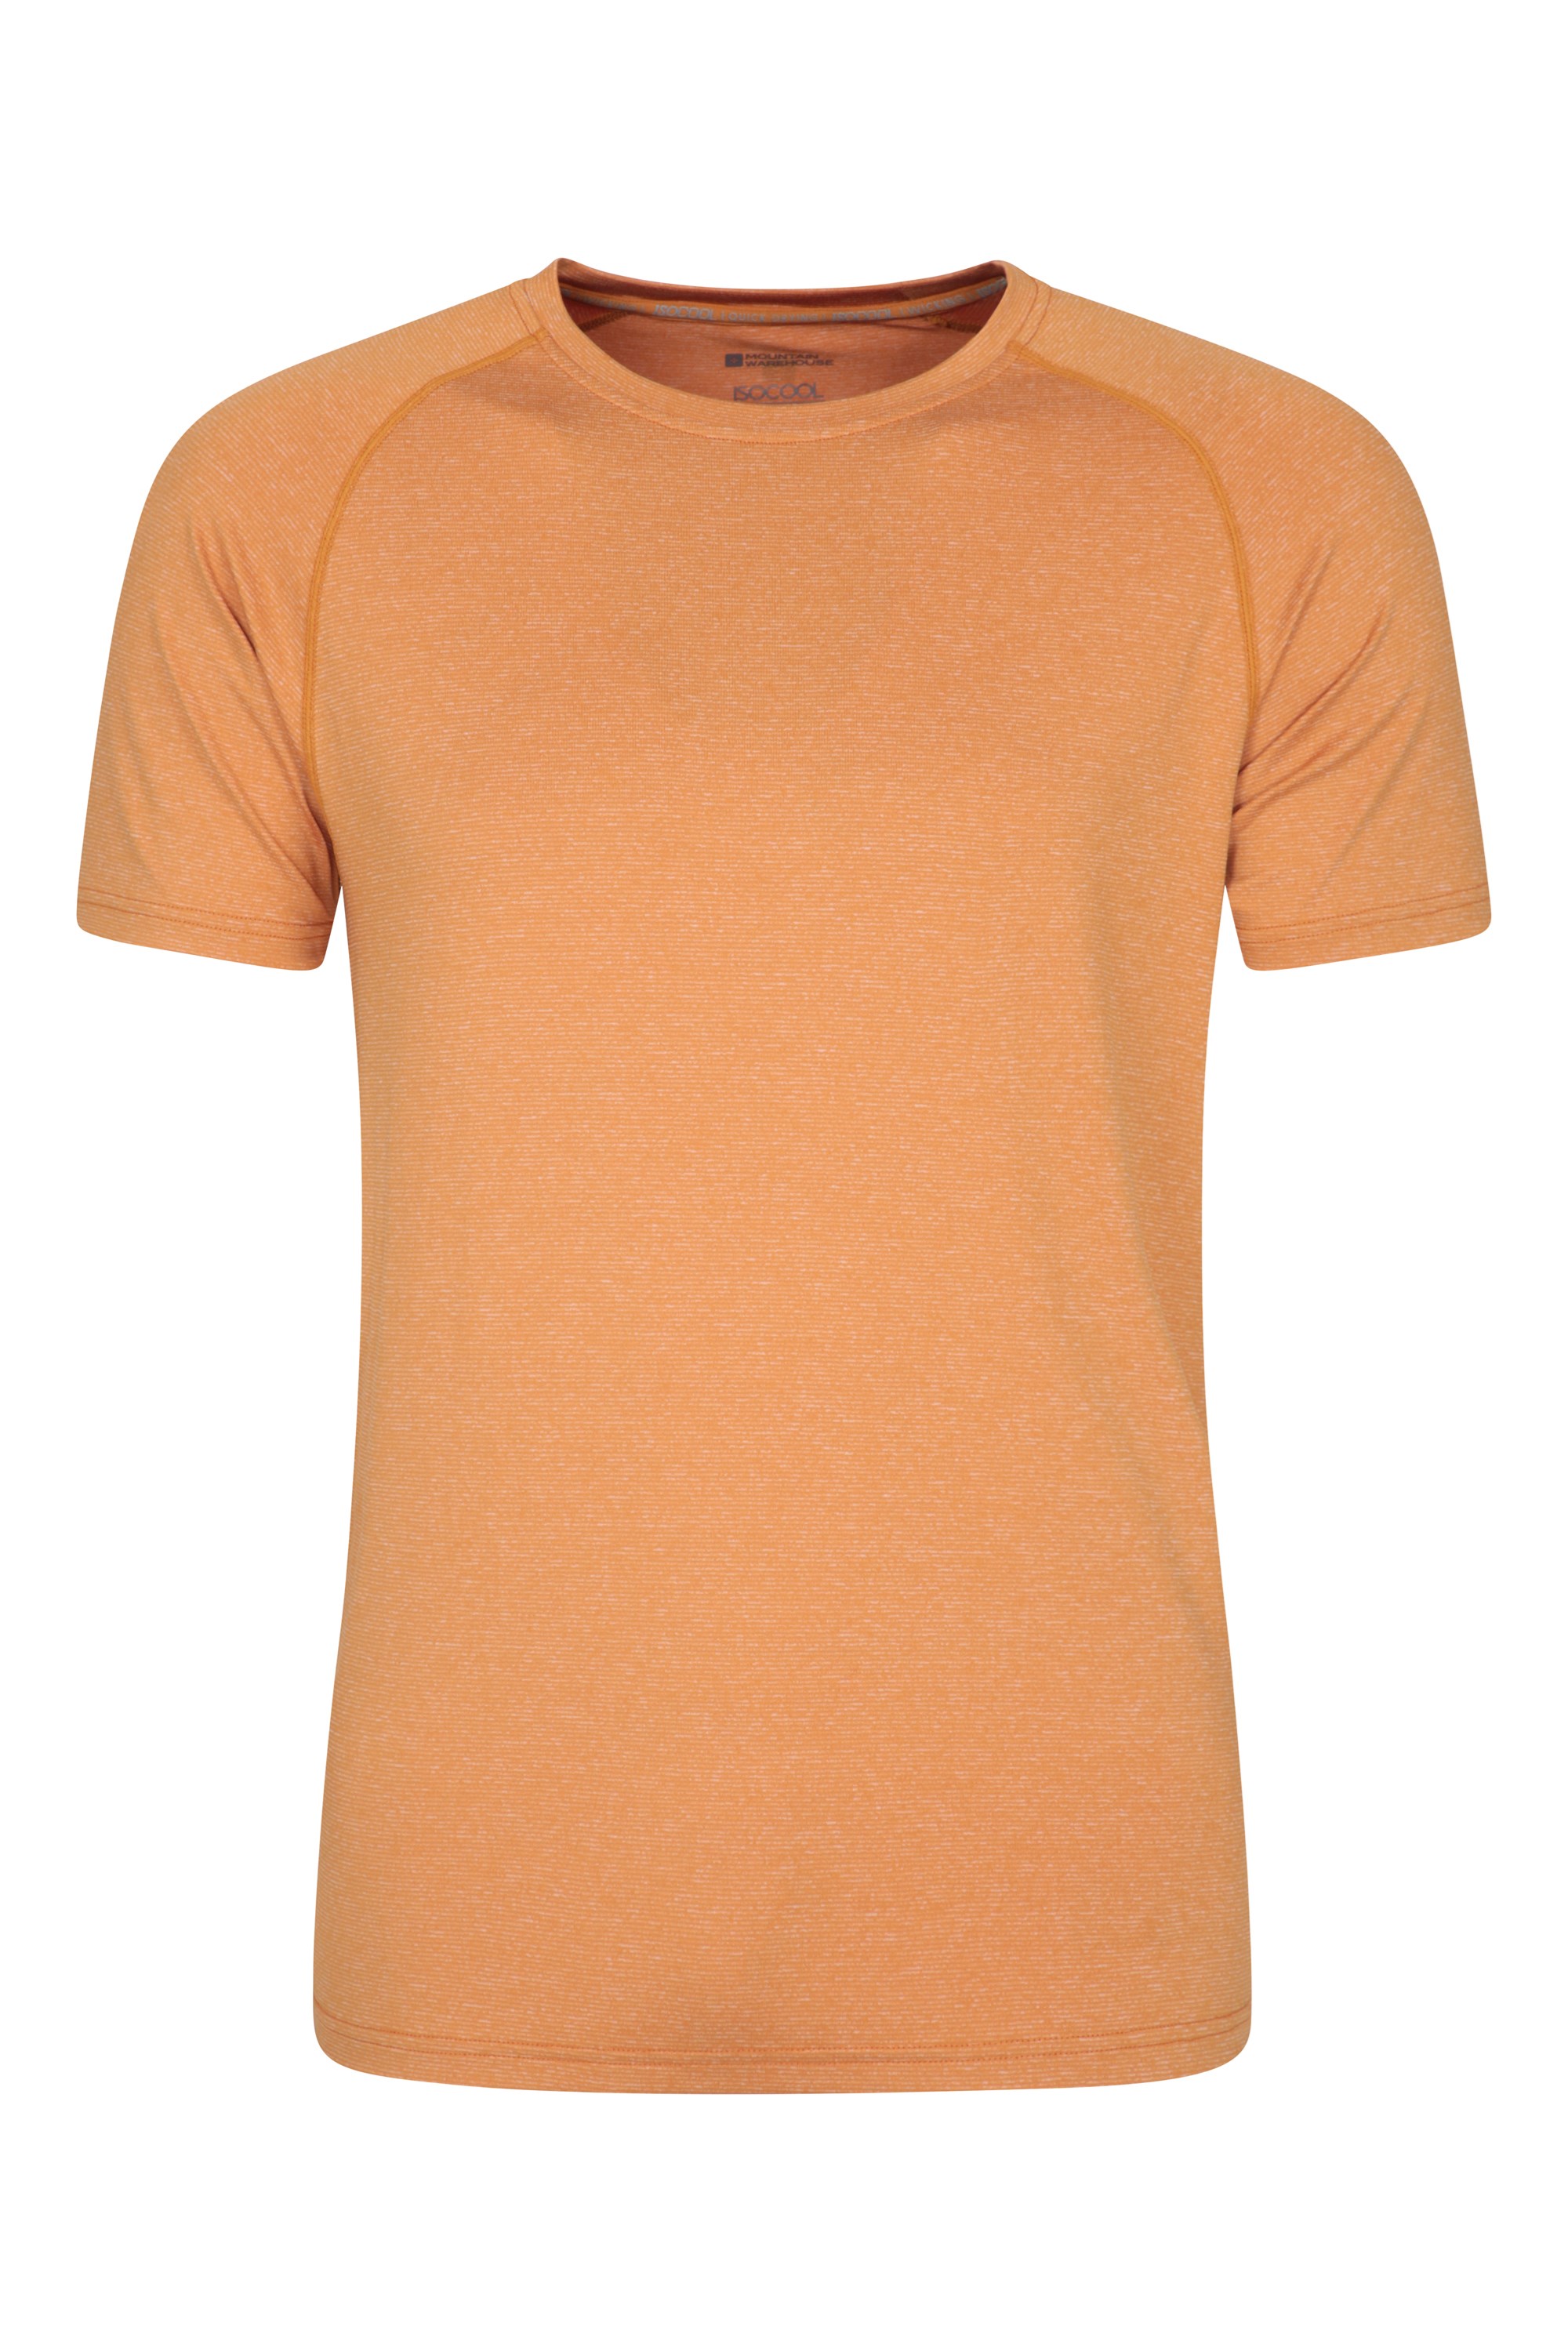 T-shirt IsoCool hommes Agra - Jaune